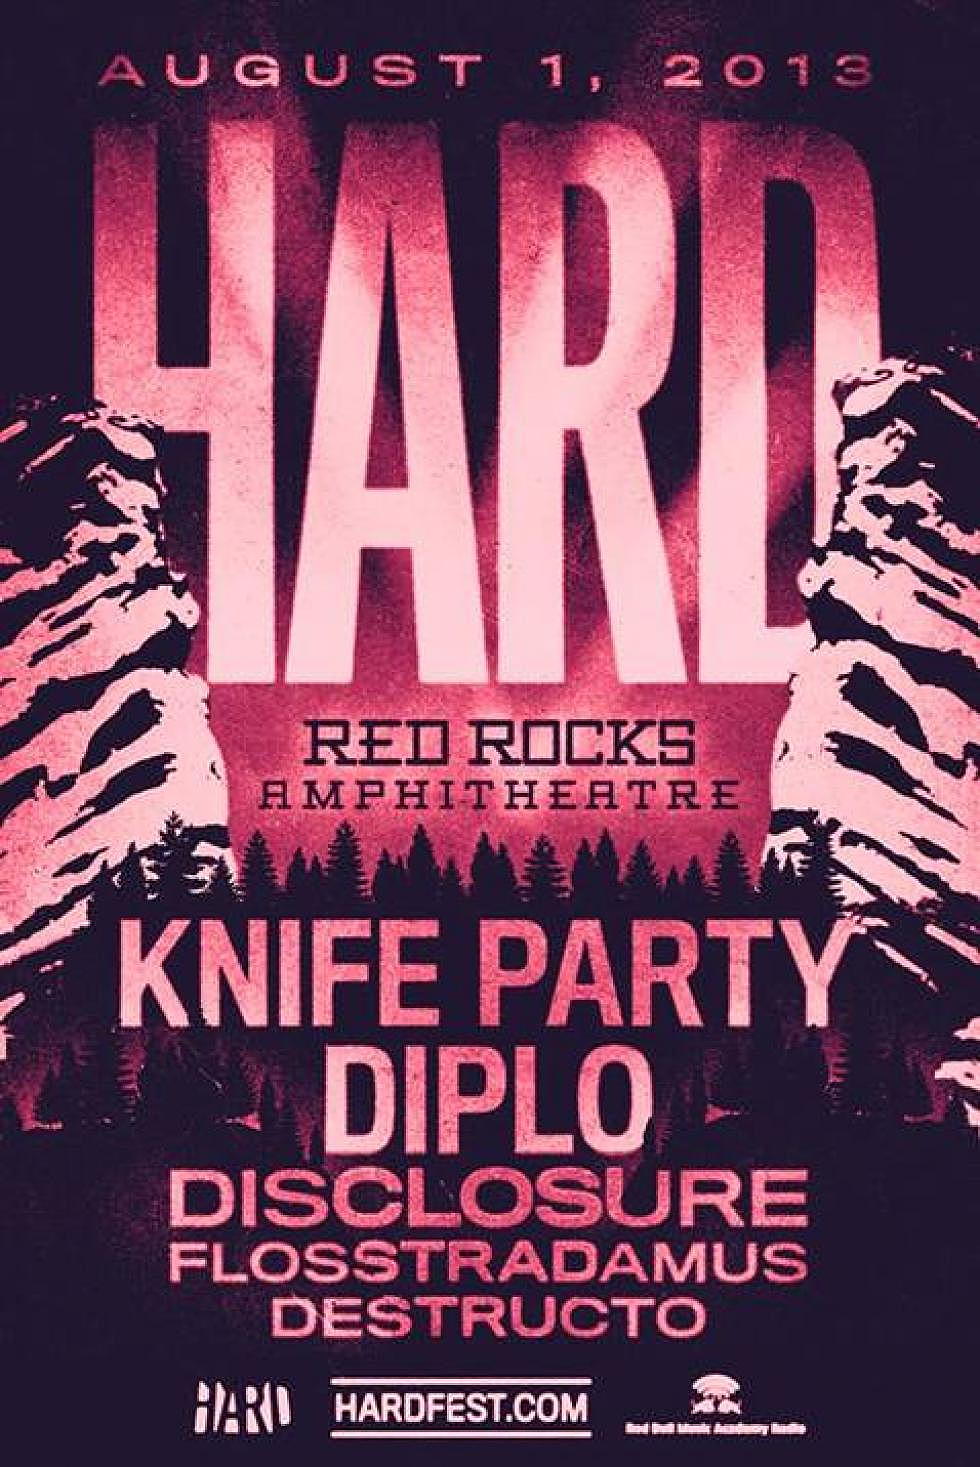 HARD Red Rocks Artist Announcement